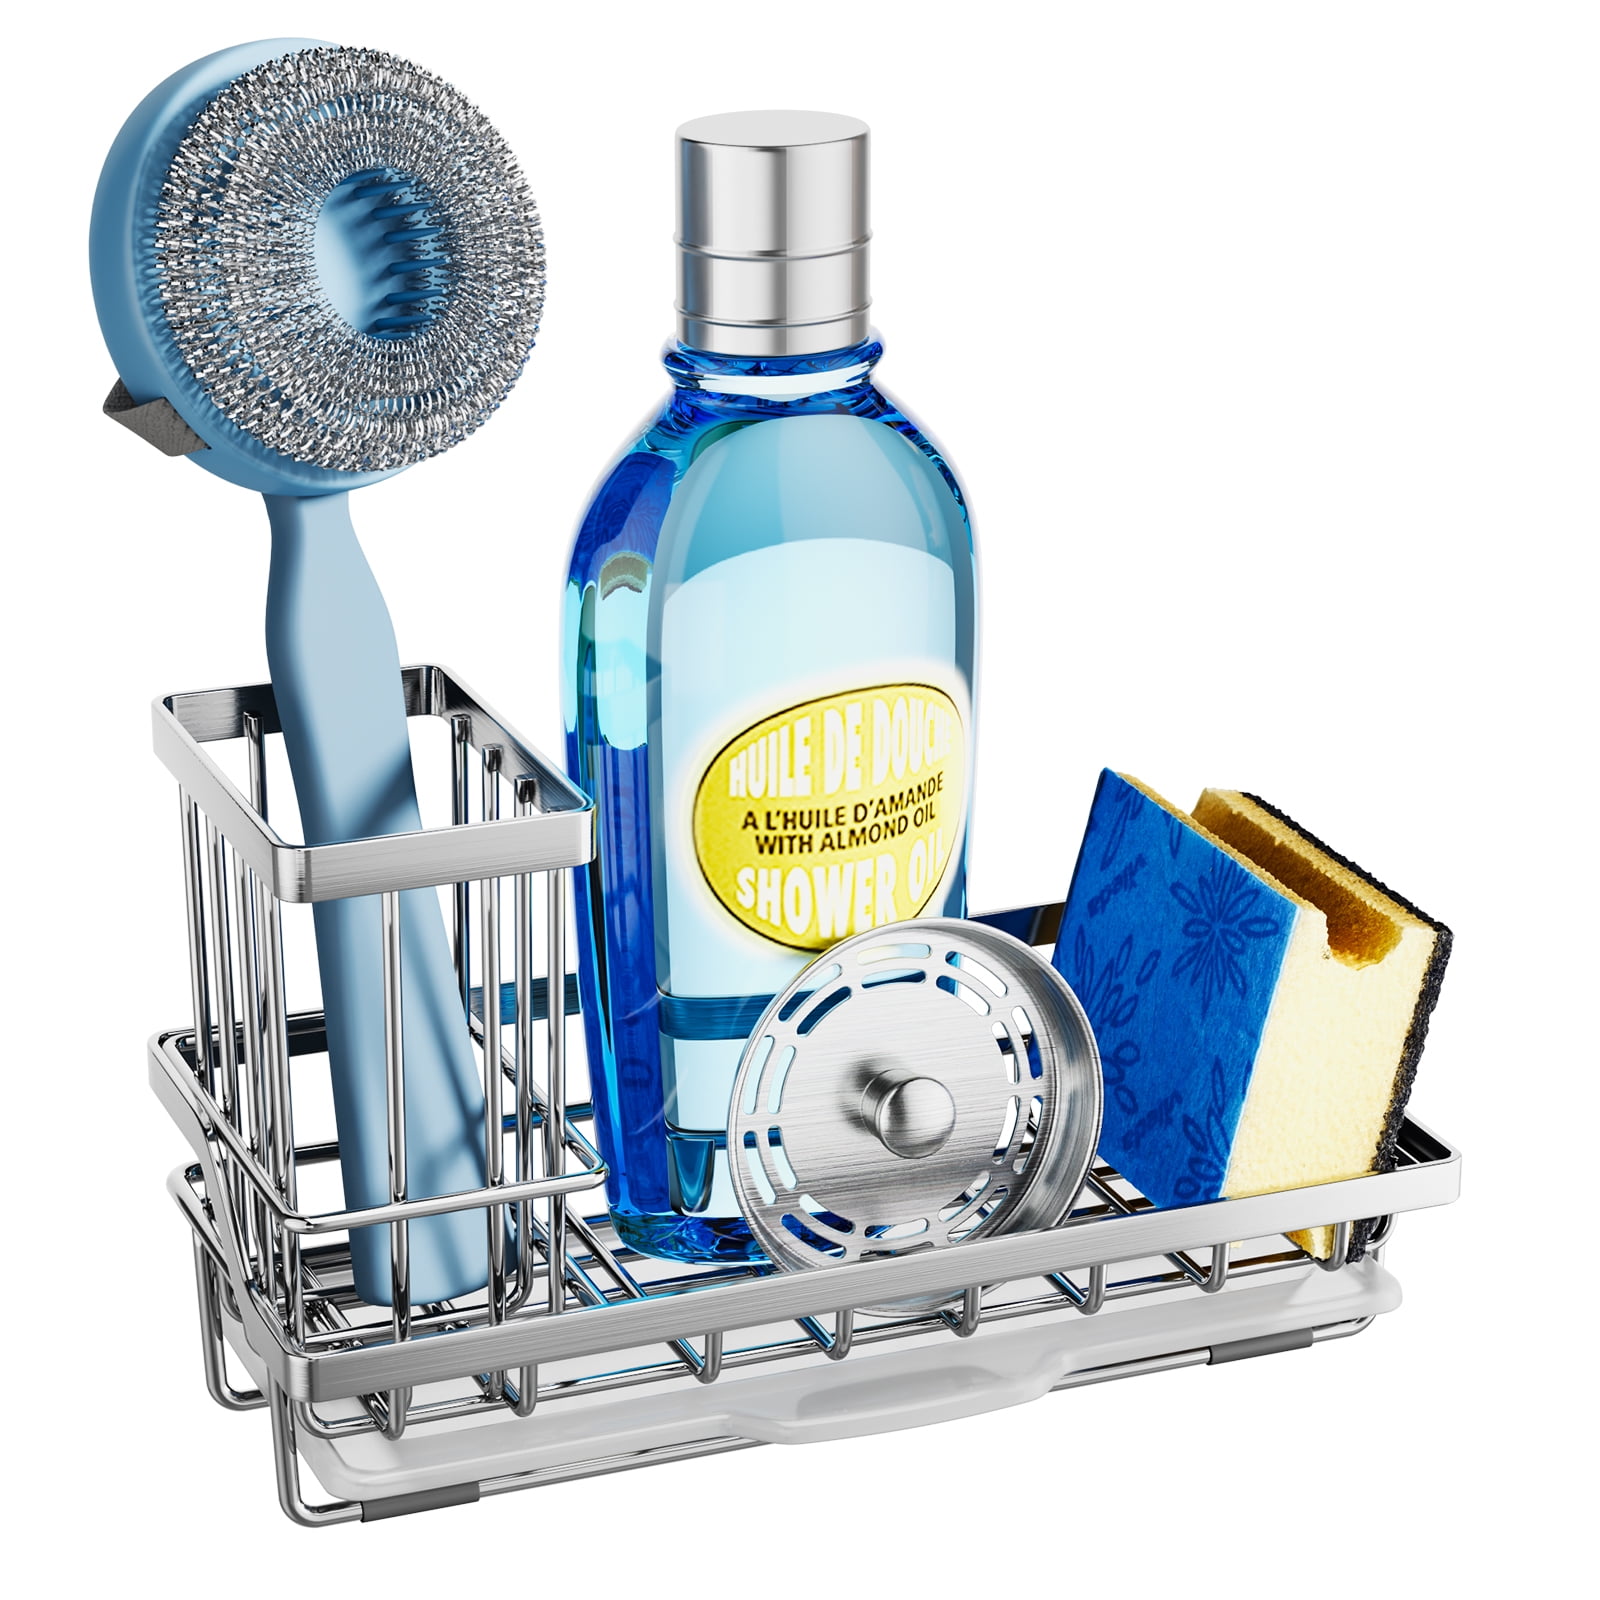 HapiRm Sponge Holder Kitchen Sink Caddy Organizer, Sponge Dish Brush Soap  Dispenser Holder with Drain Tray